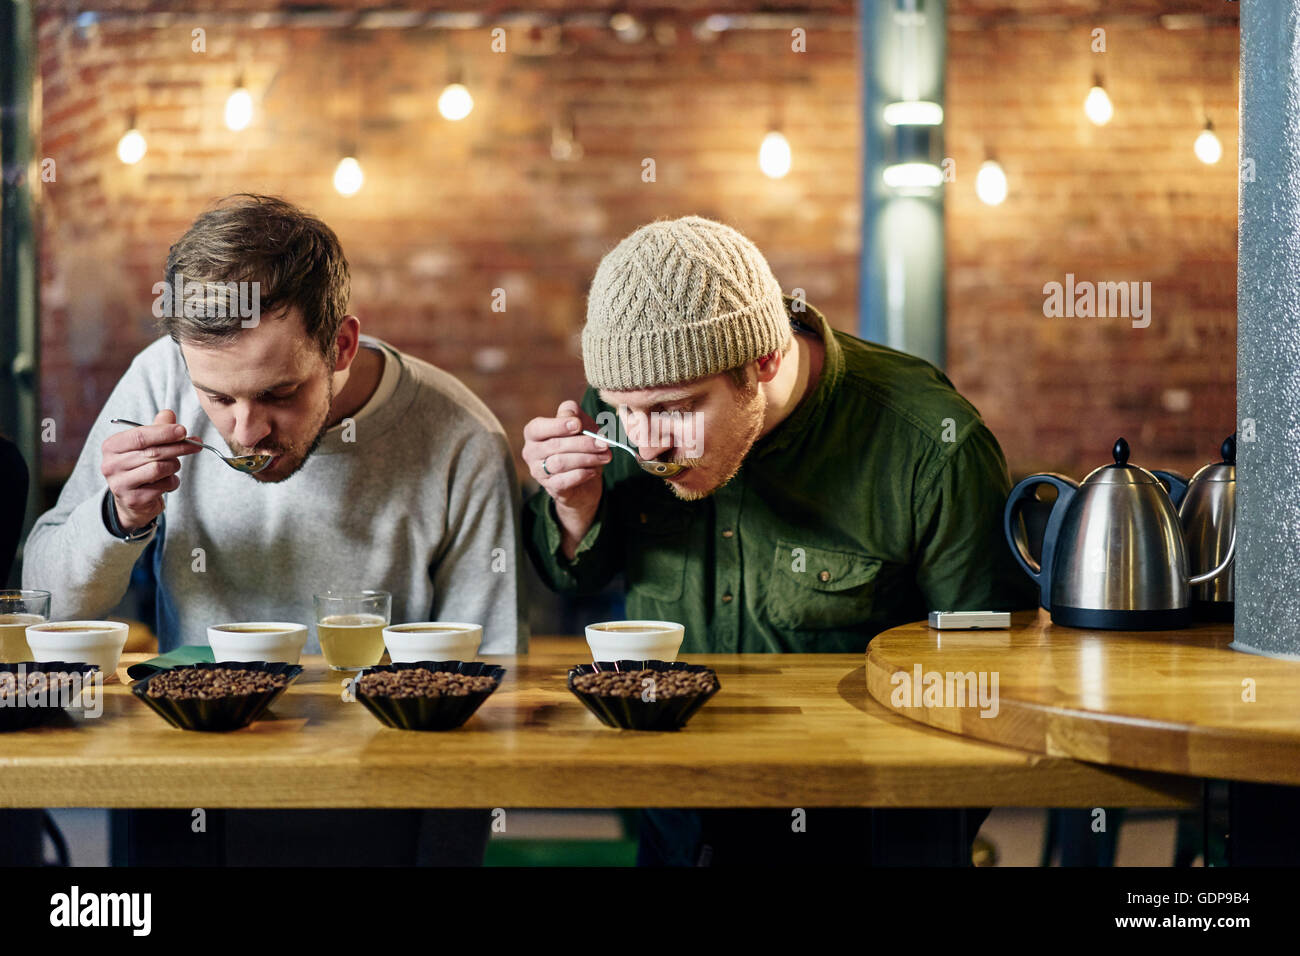 Coffee shop team slurping bocce di caffè e caffè in grani alla degustazione Foto Stock